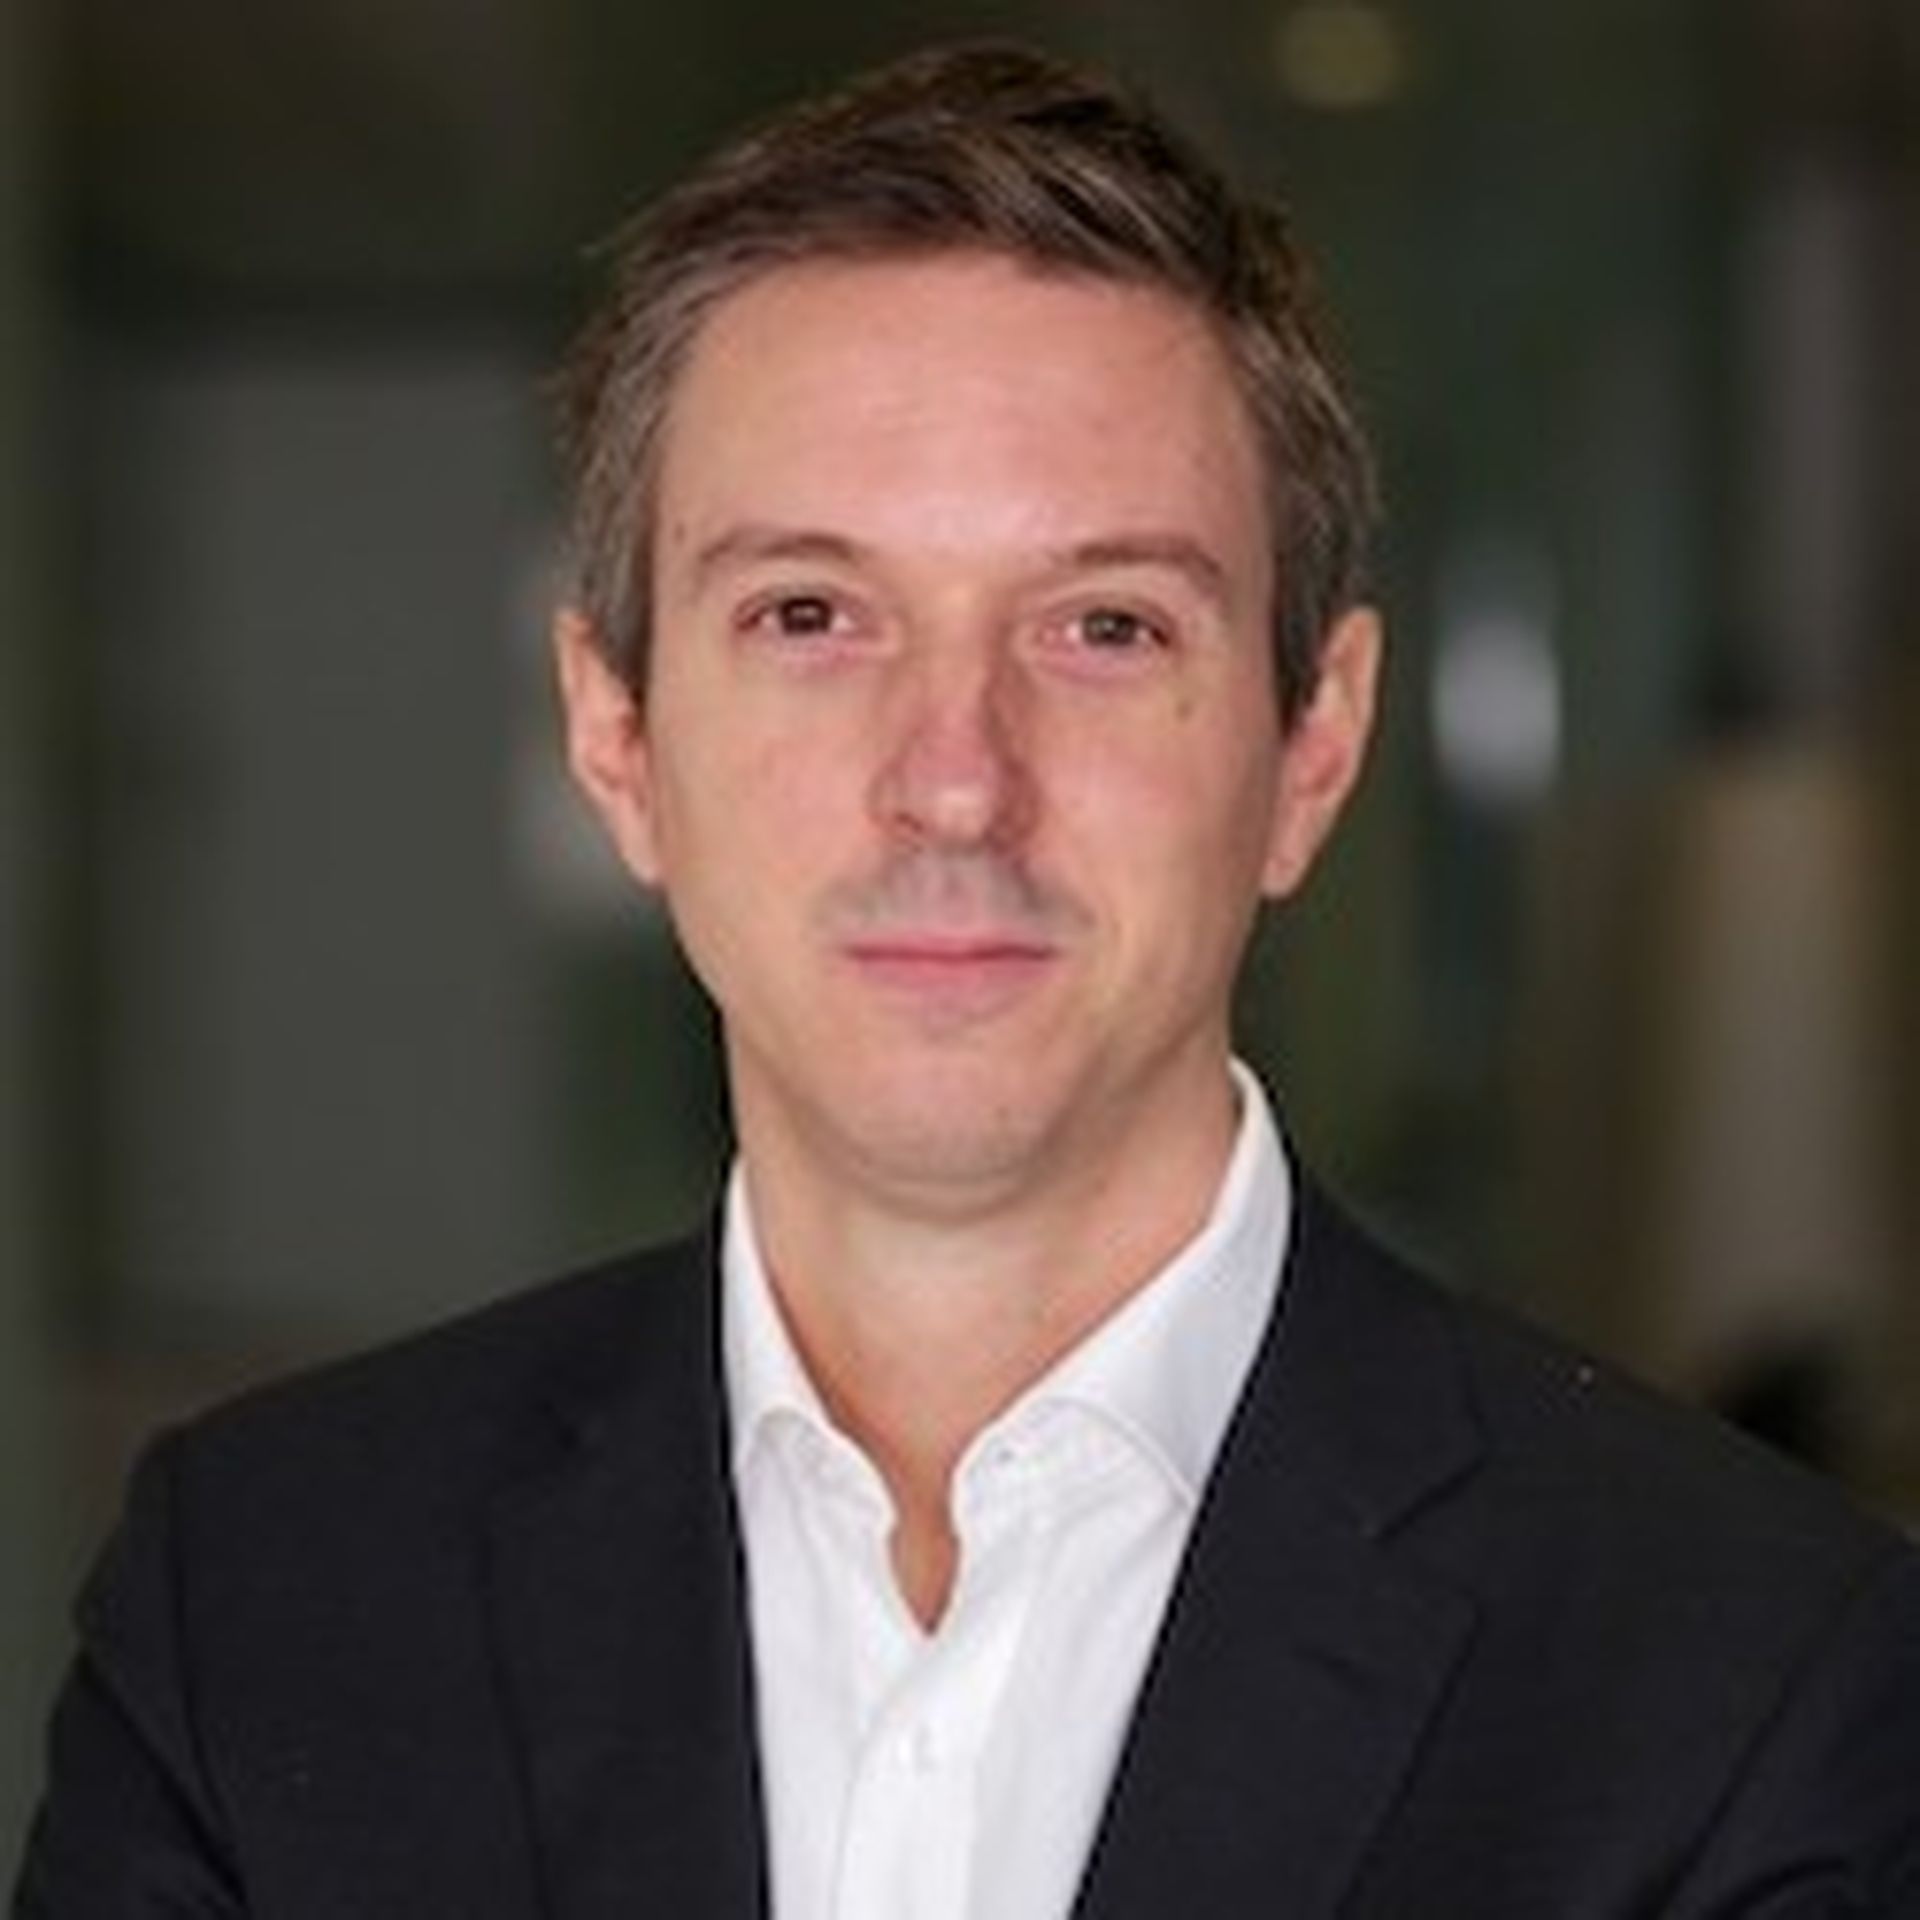 Accenture Security Global Head Paolo Dal Cin